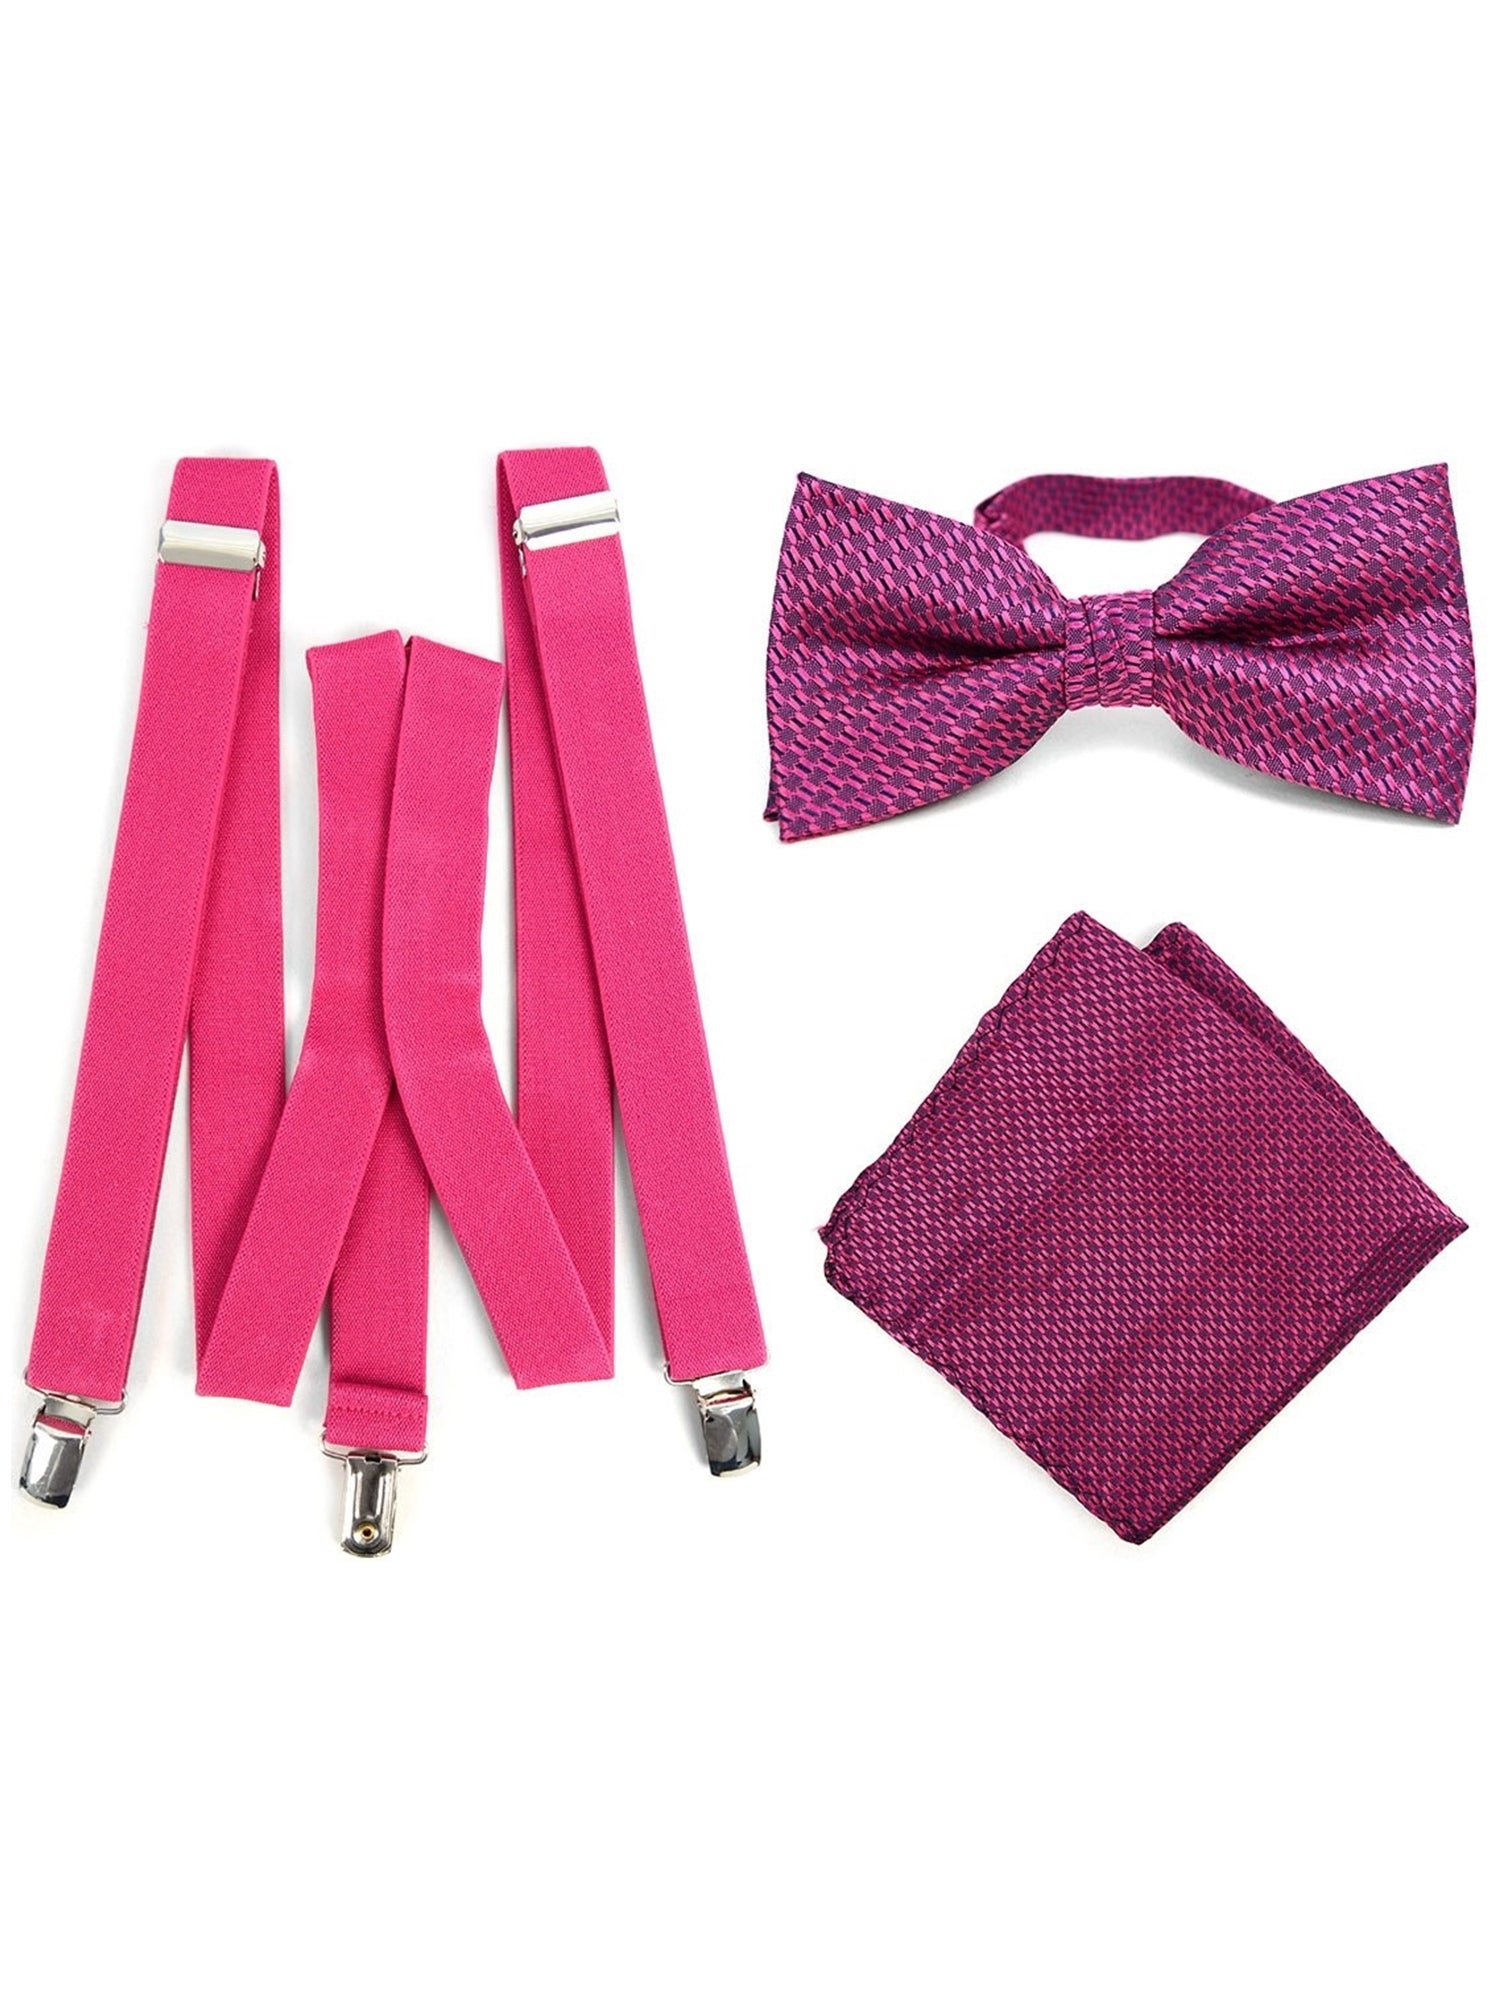 Men's Fuchsia 3 PC Clip-on Suspenders, Bow Tie & Hanky Sets Men's Solid Color Bow Tie TheDapperTie Fuchsia # 1 Regular 